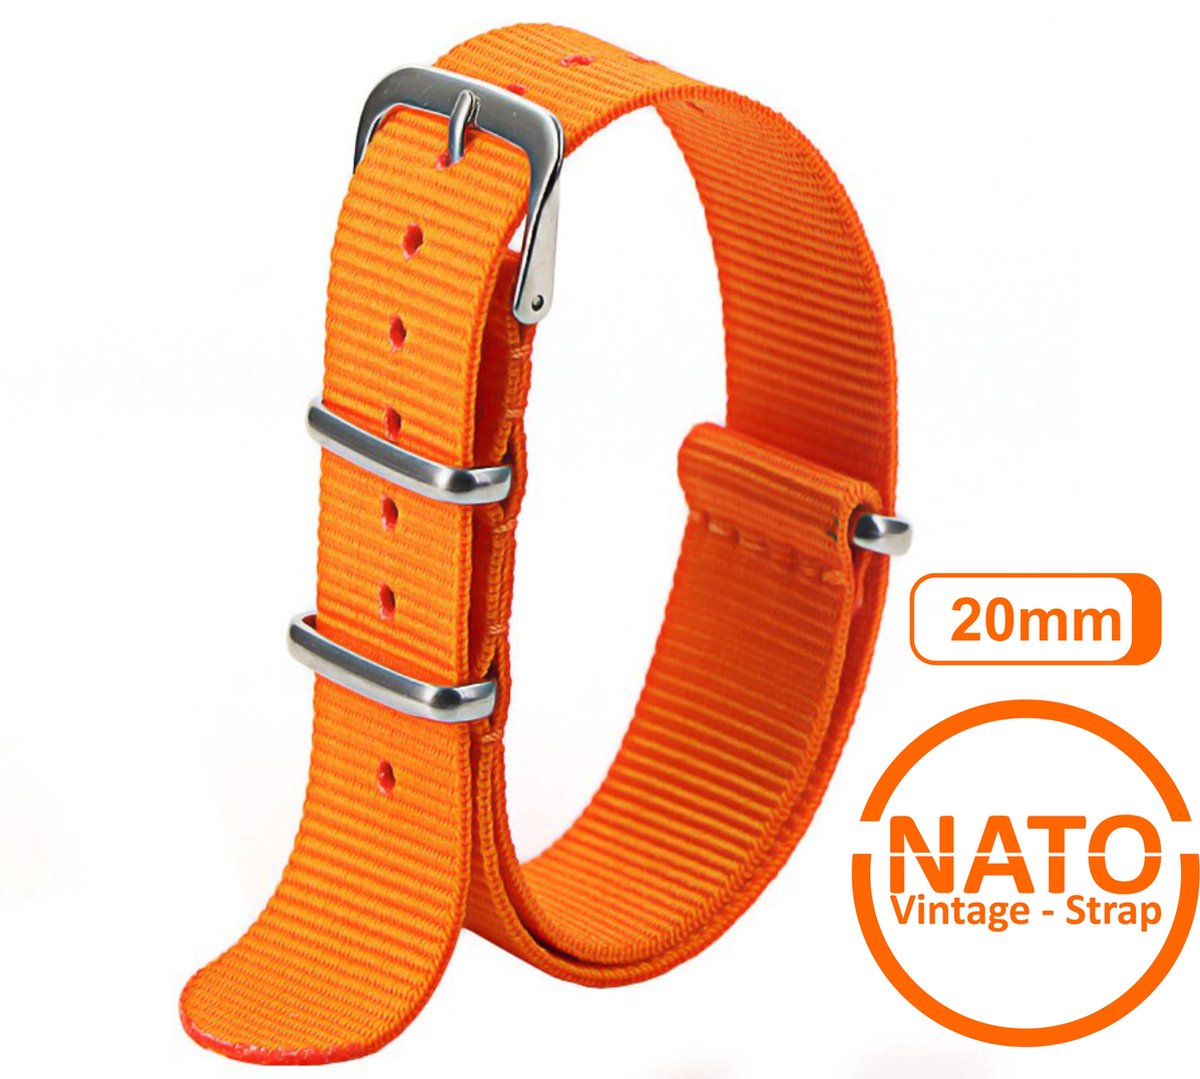 20mm Premium Nato Strap Oranje - Vintage James Bond - Nato Strap collectie - Mannen - Horlogeband - 20 mm bandbreedte voor oa. Seiko Rolex Omega Casio en Citizen